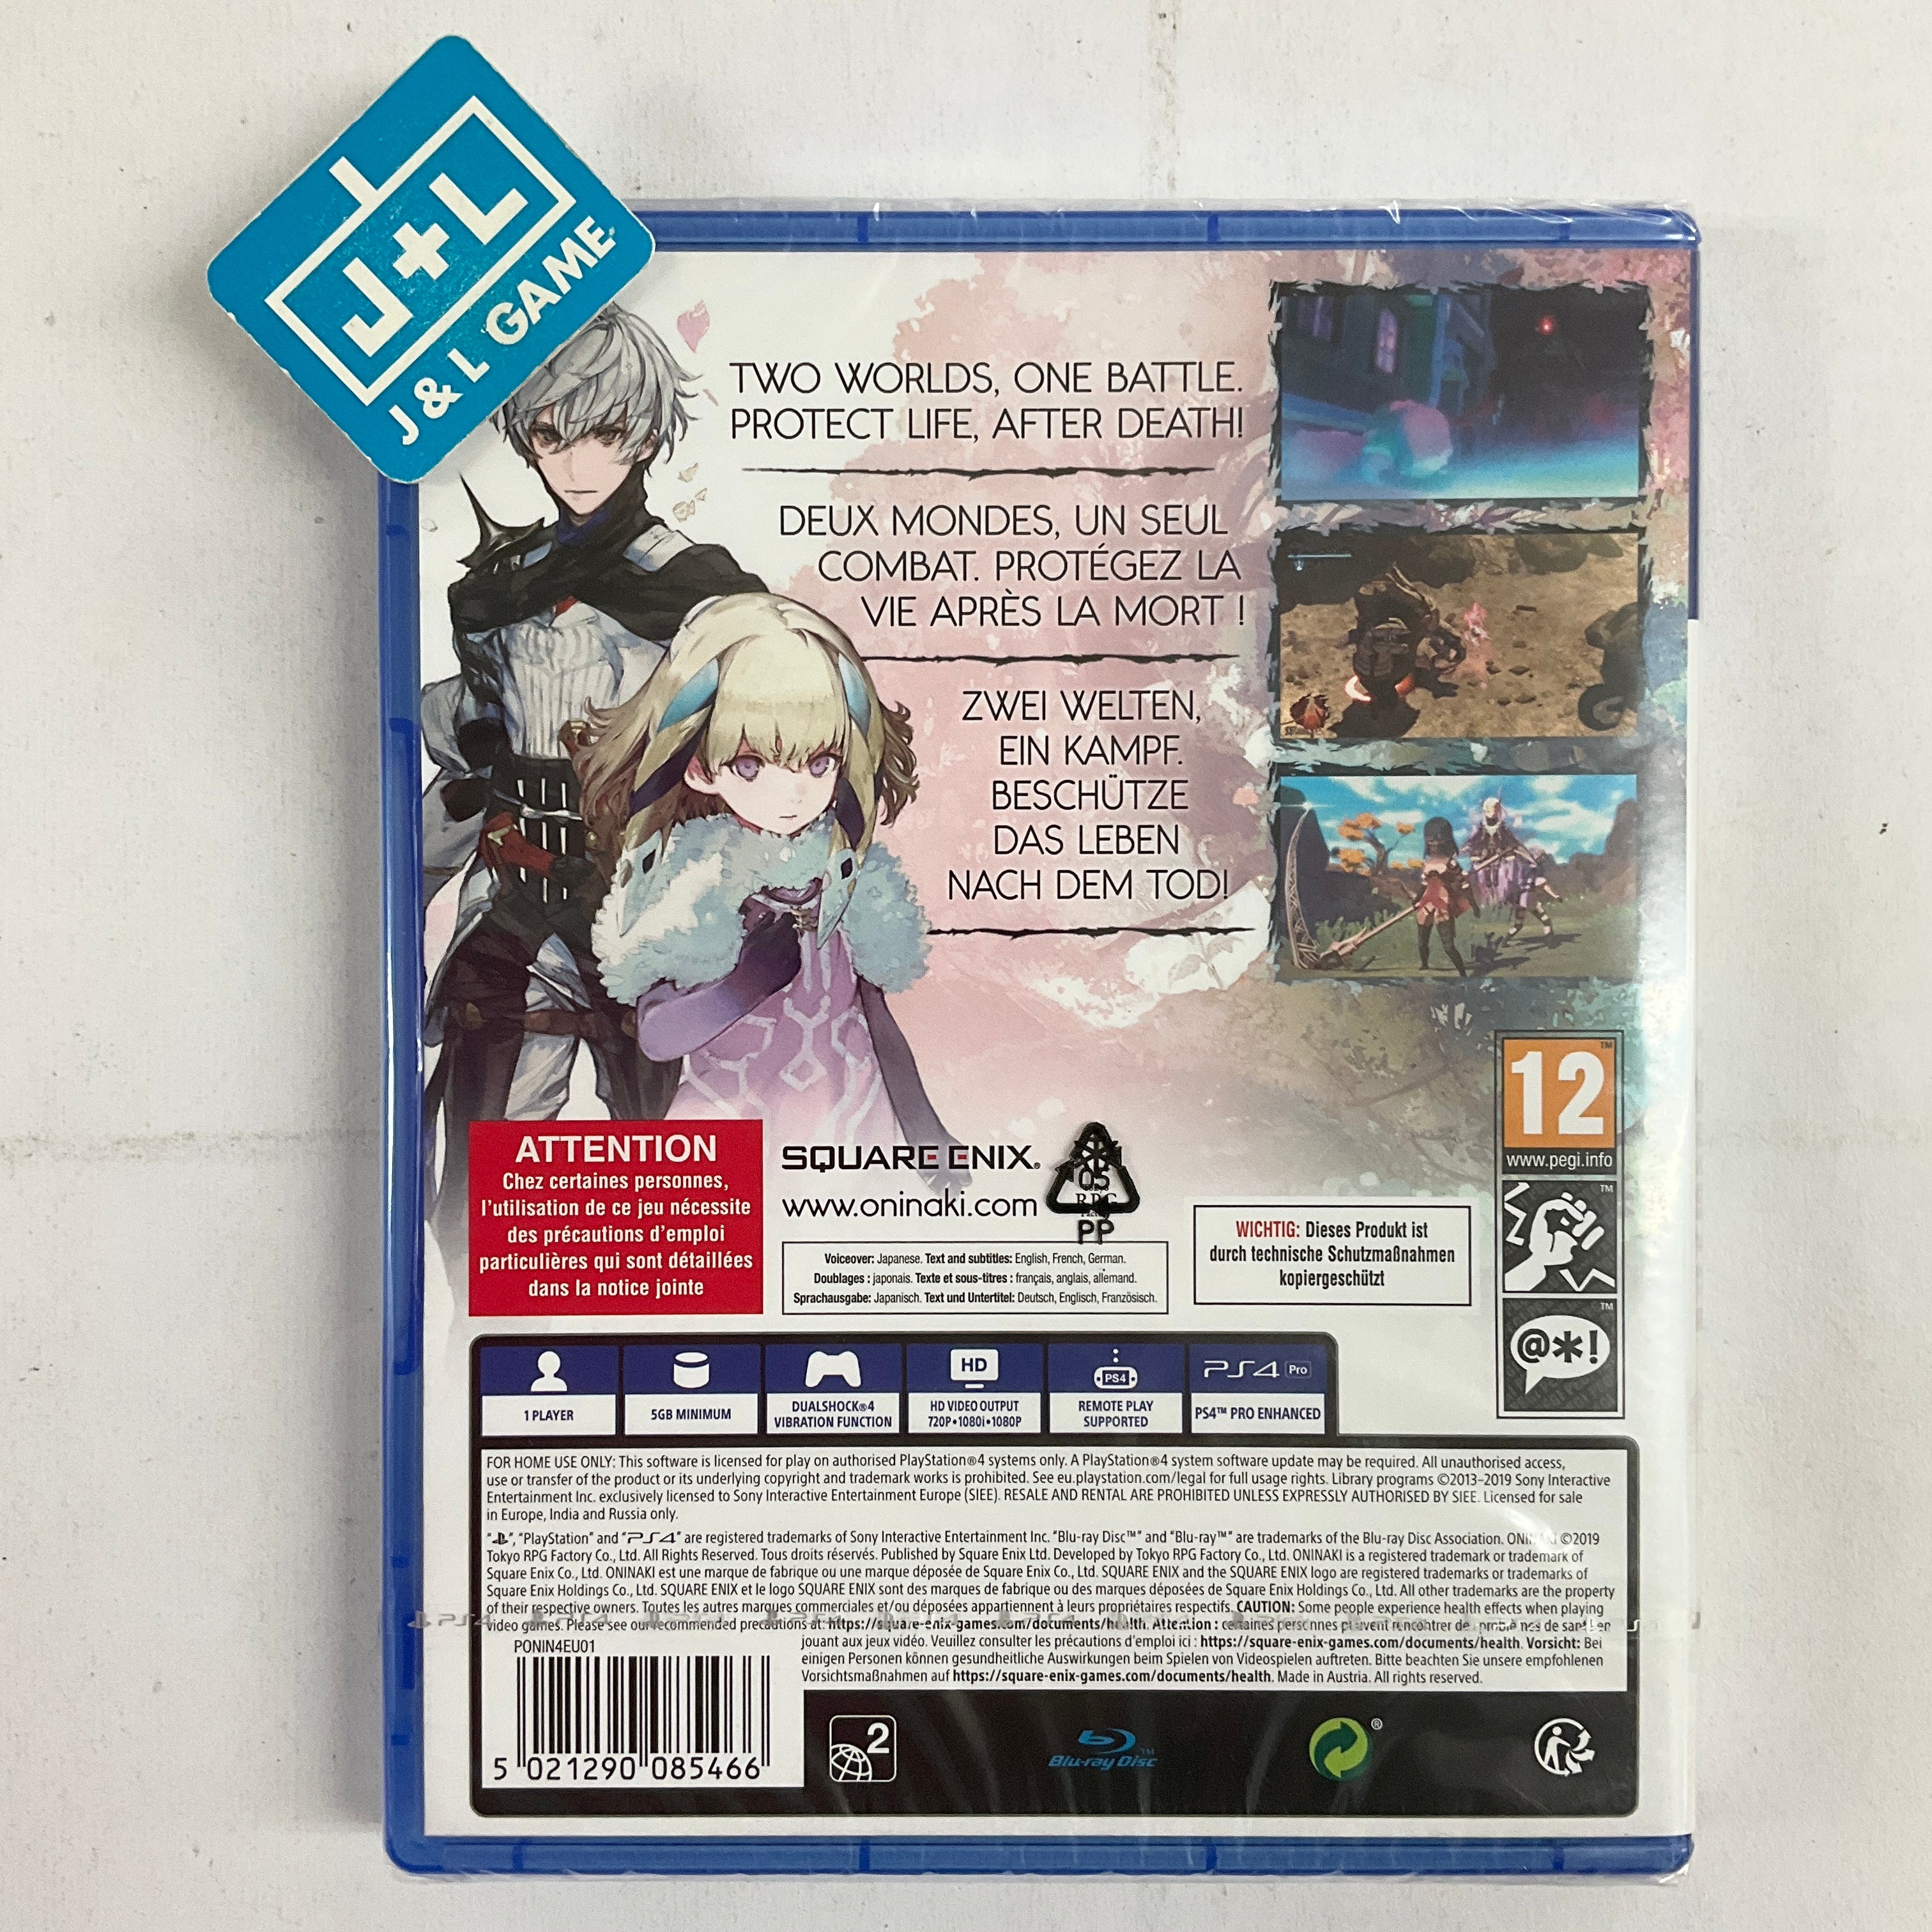 Oninaki - (PS4) PlayStation 4 (European Import) Video Games Square Enix   